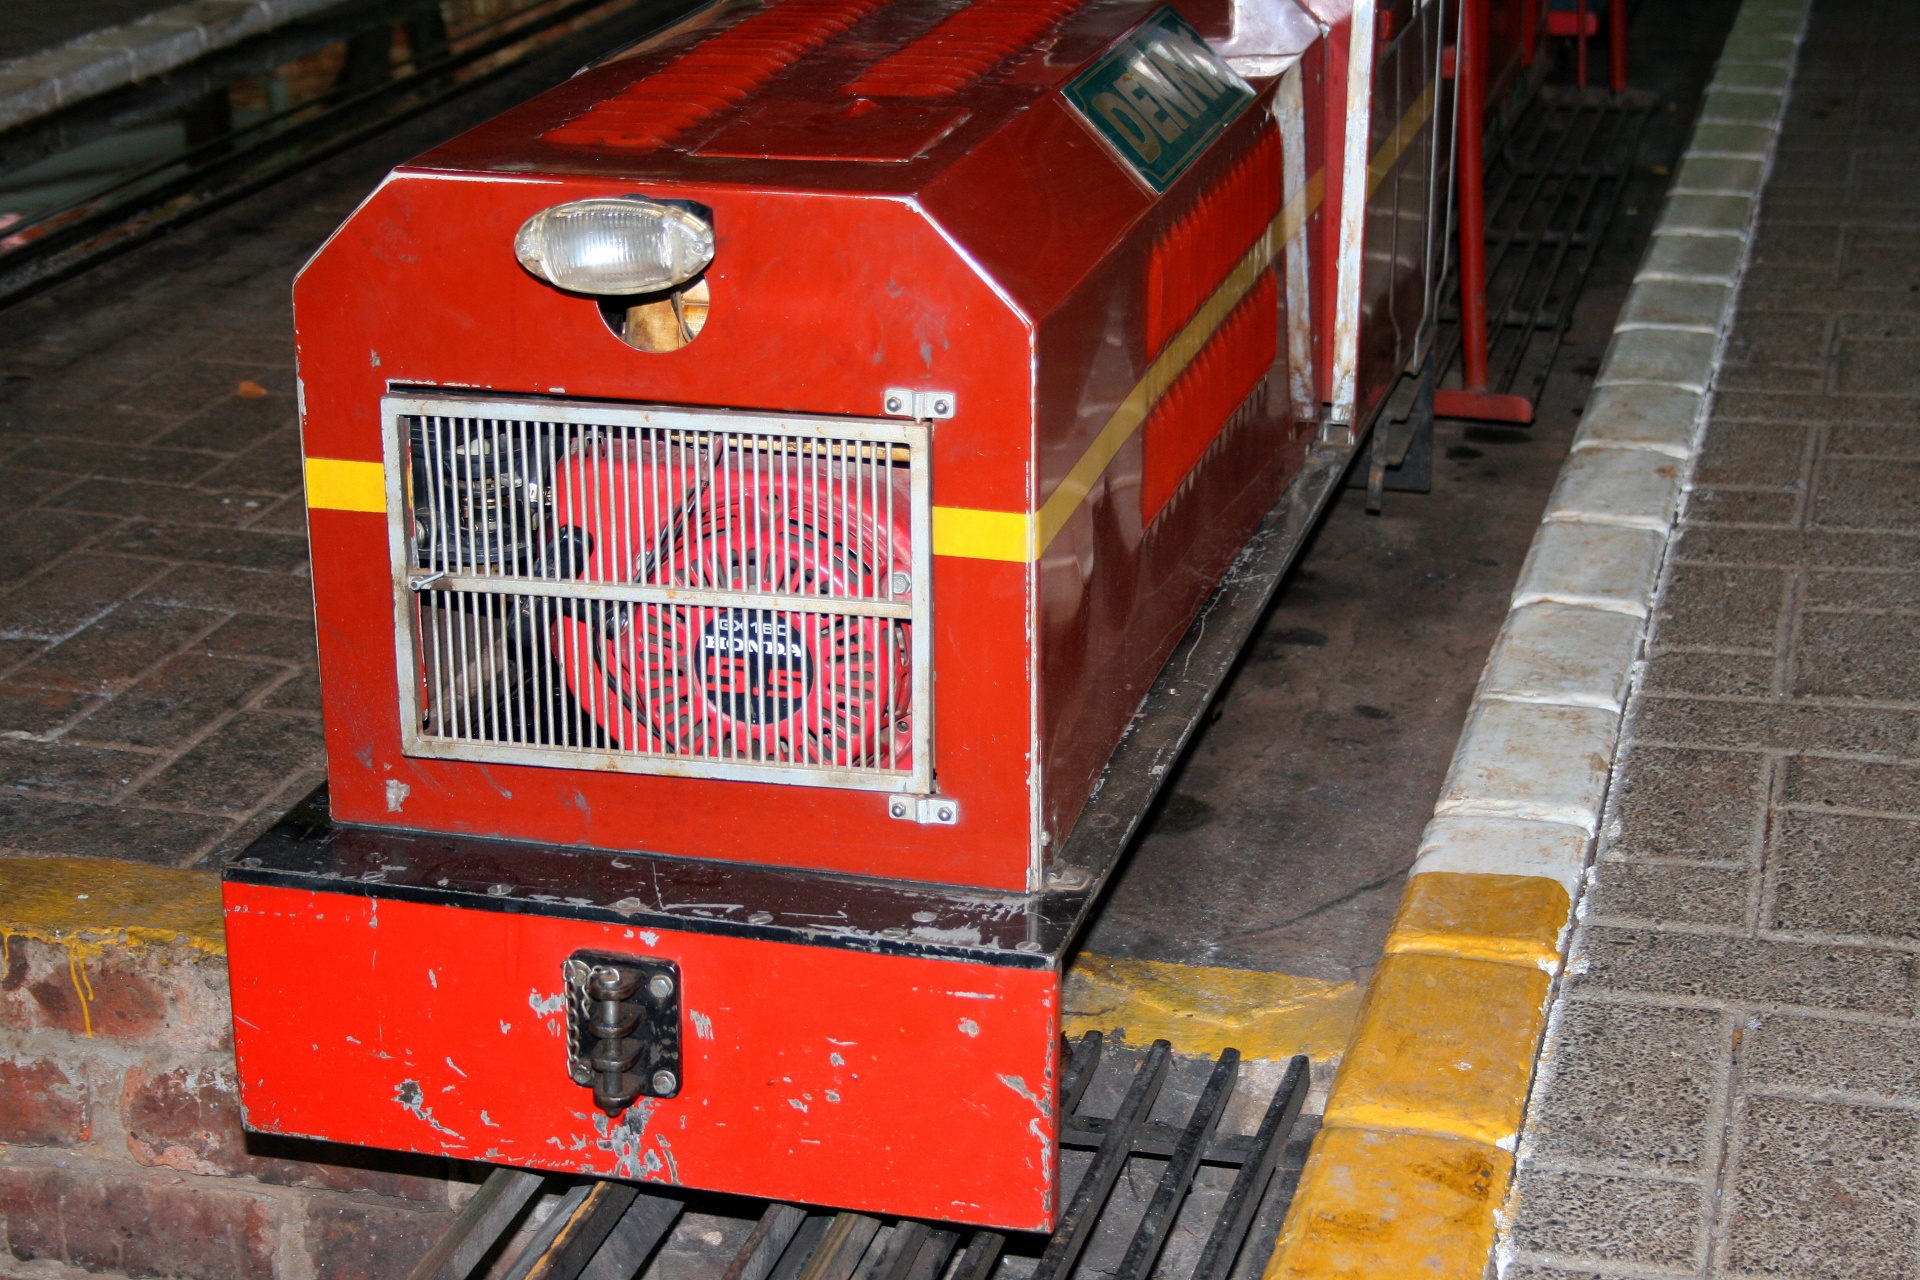 Red Model Train Engine